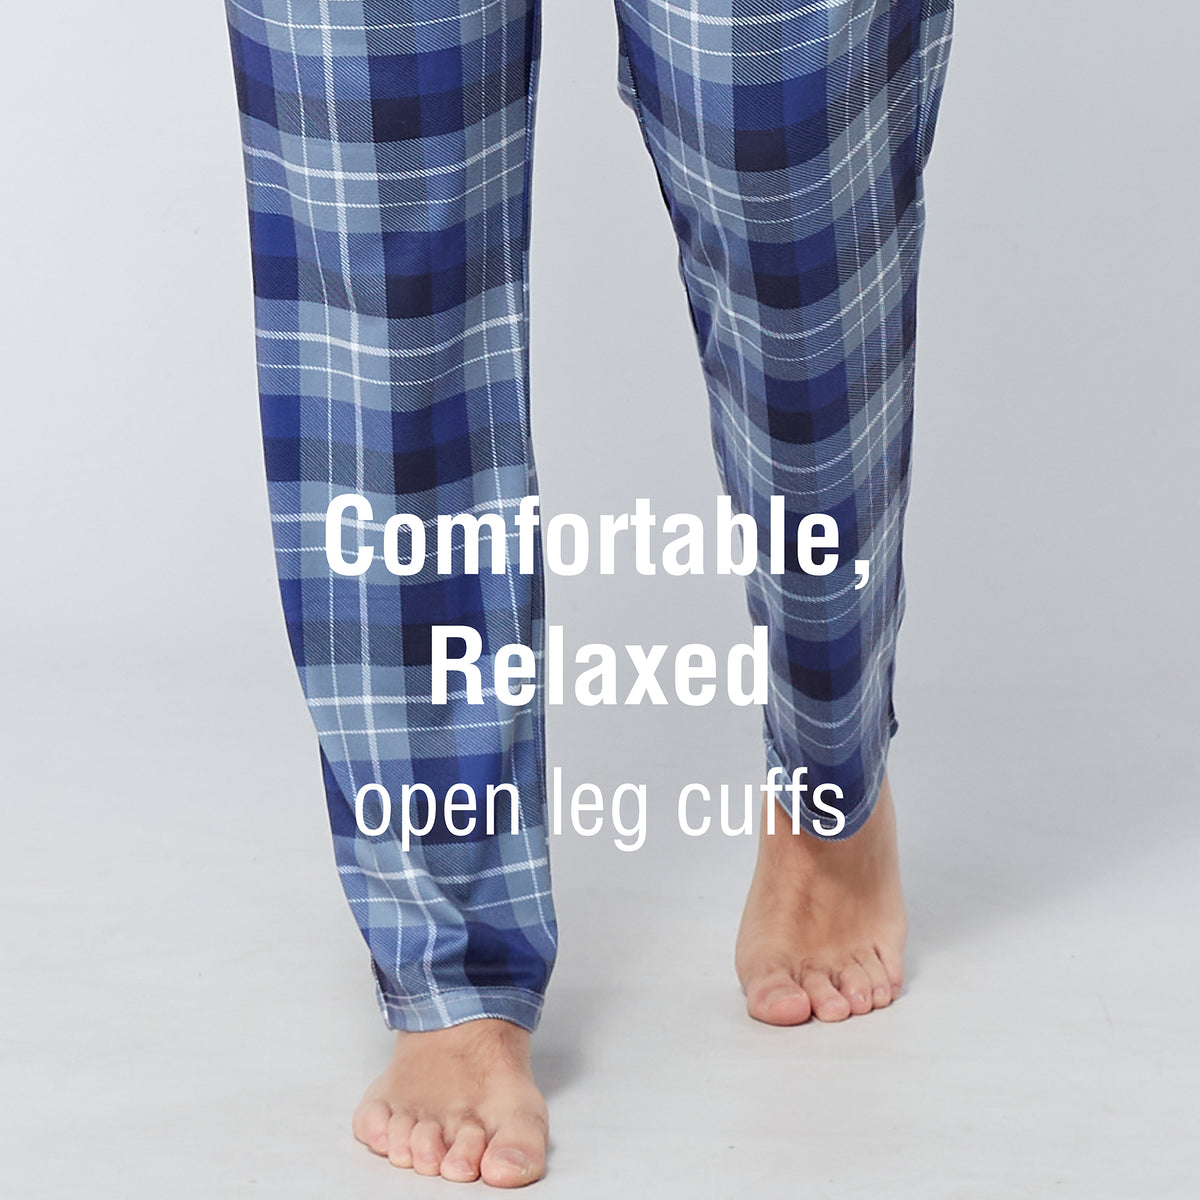 Navy / Blue Soft Touch Short Pyjama Set 